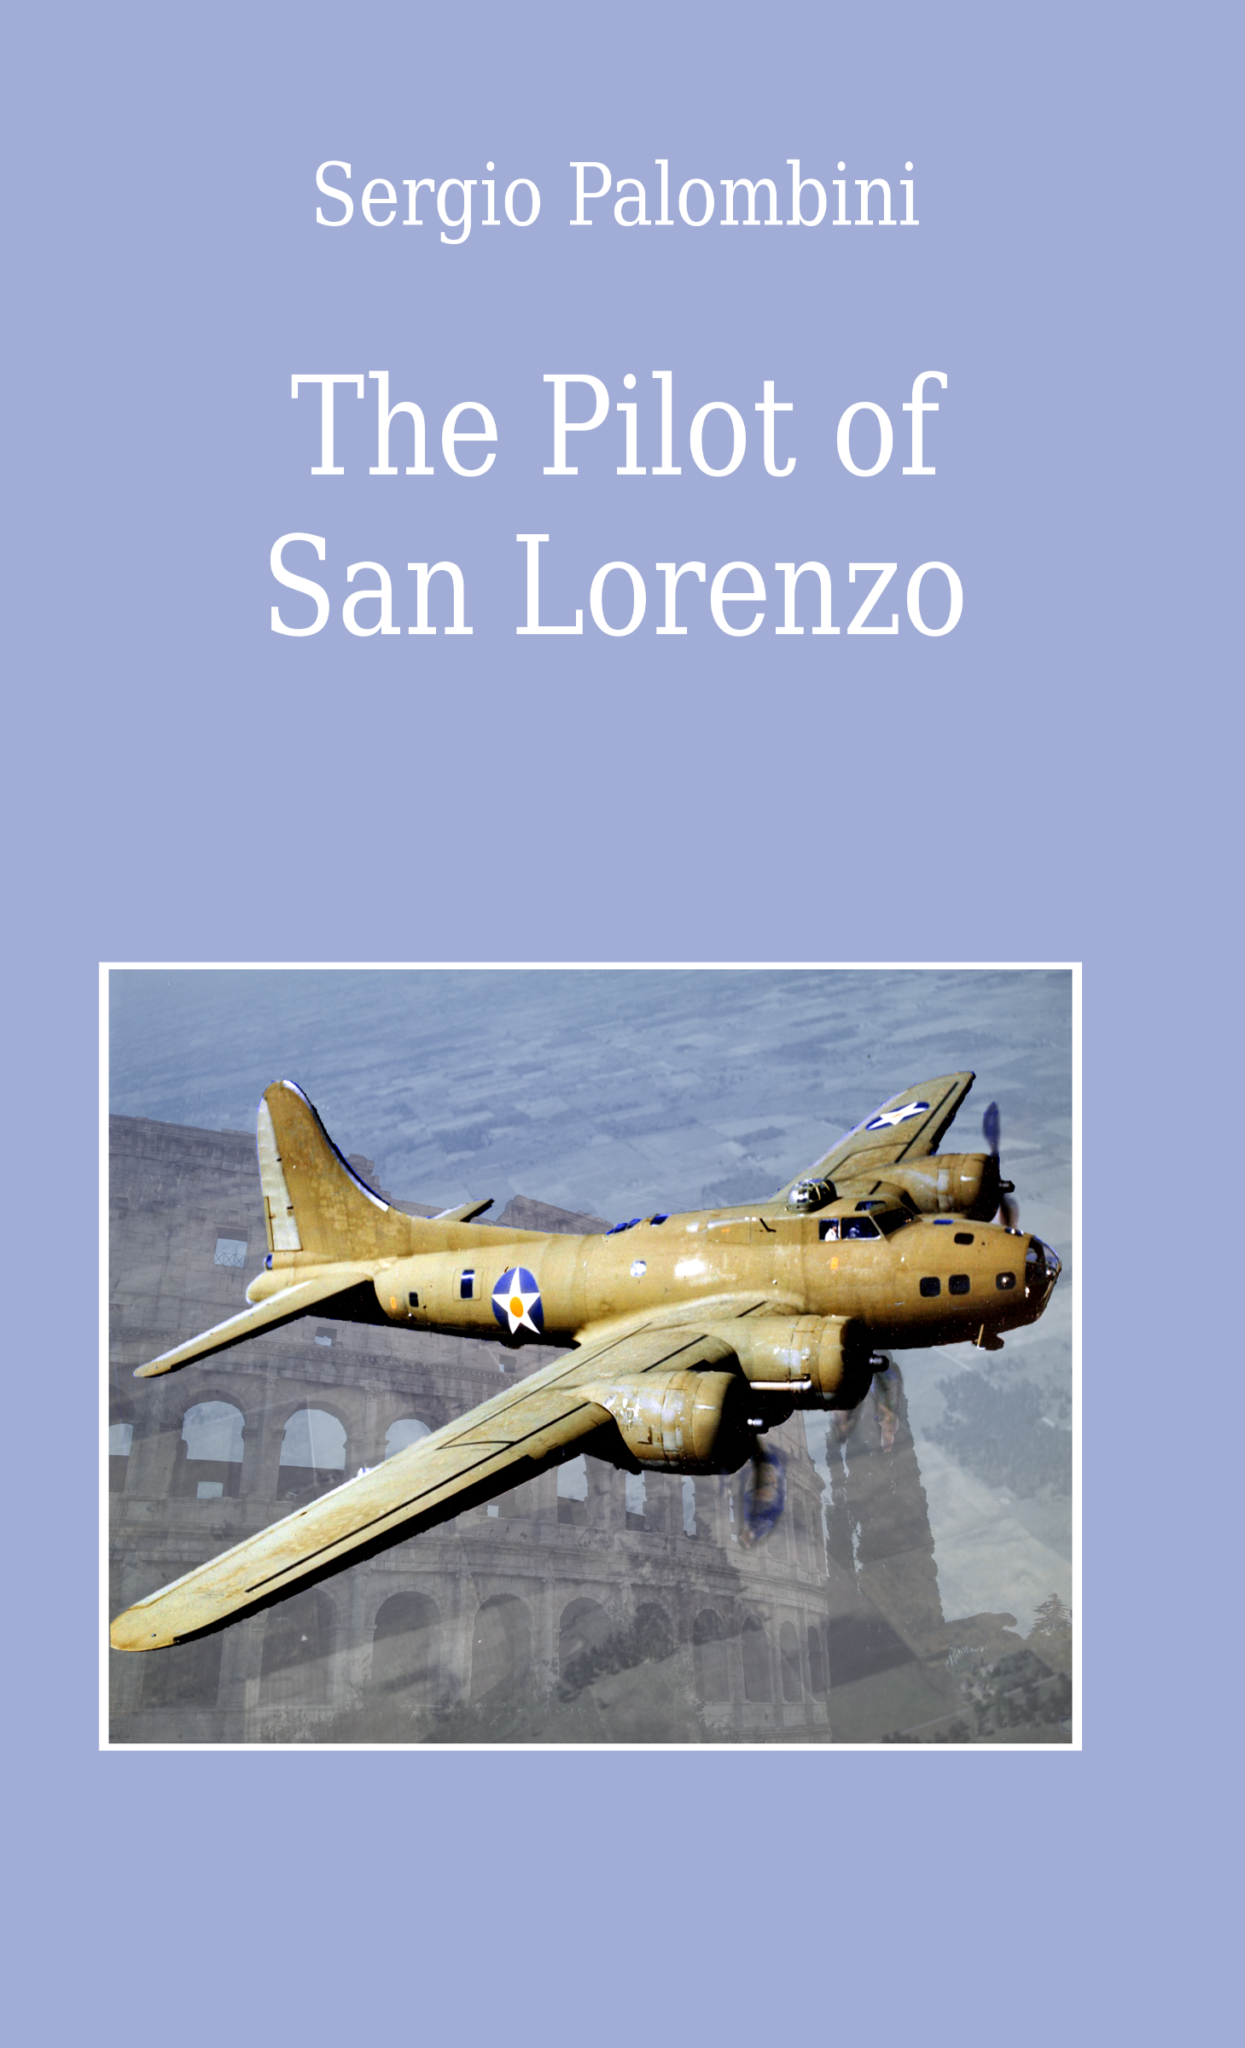 The Pilot of San Lorenzo by Sergio Palombini